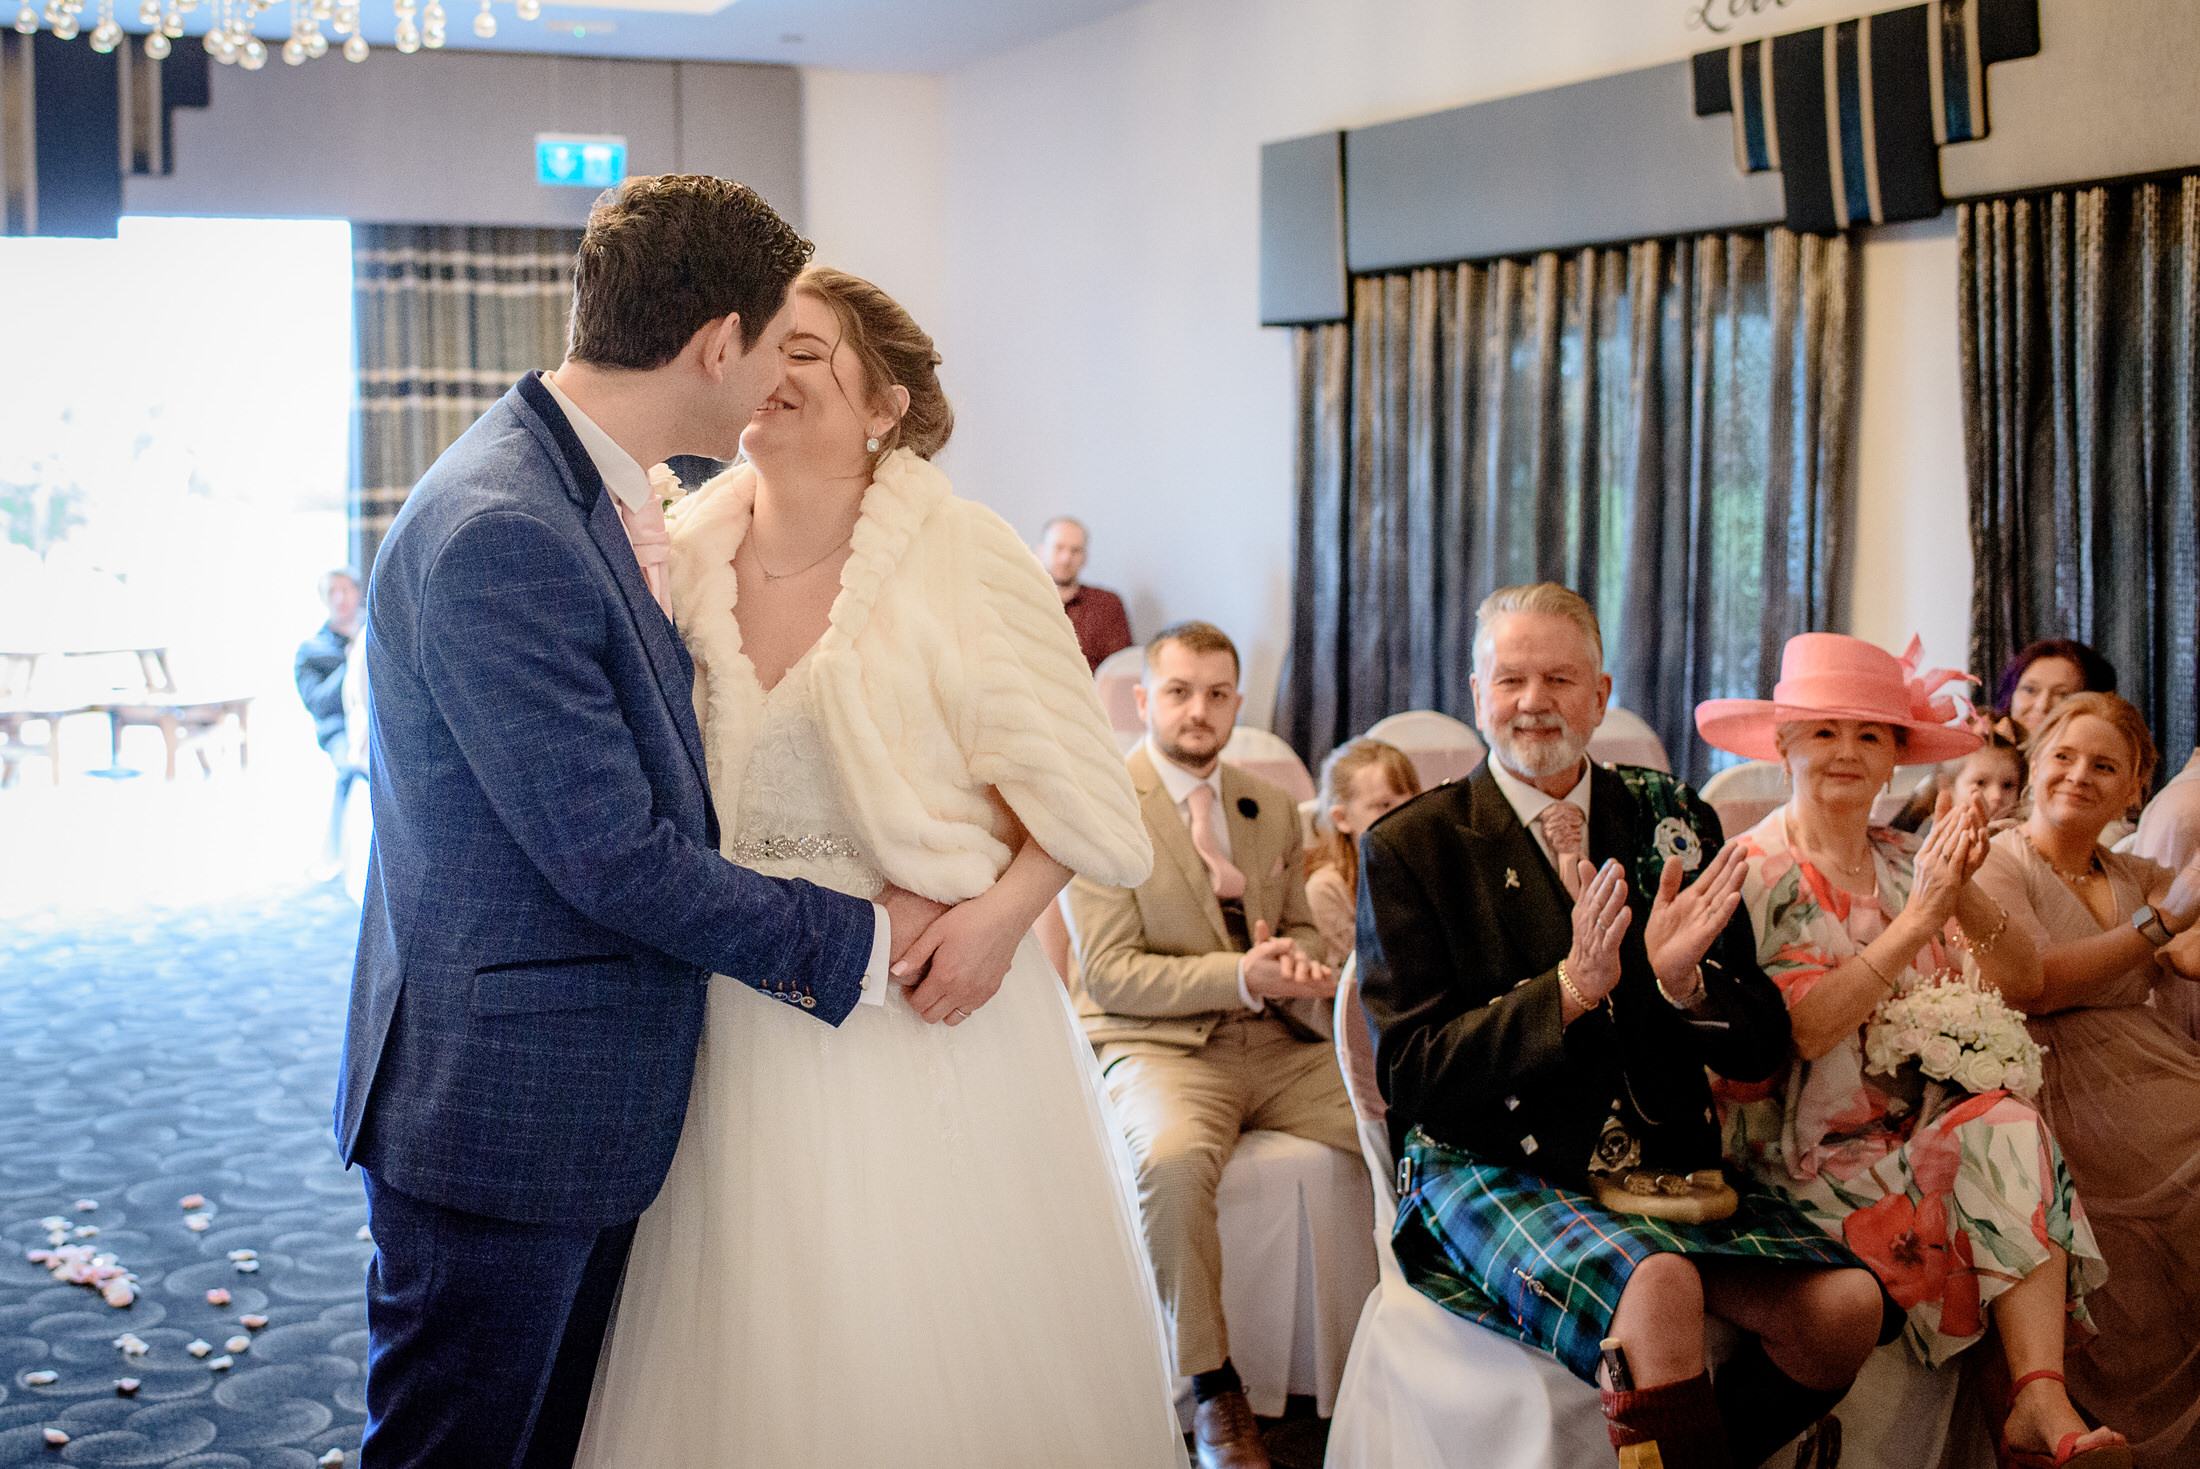 A bride and groom kiss during their Brackenborough Hotel wedding ceremony.